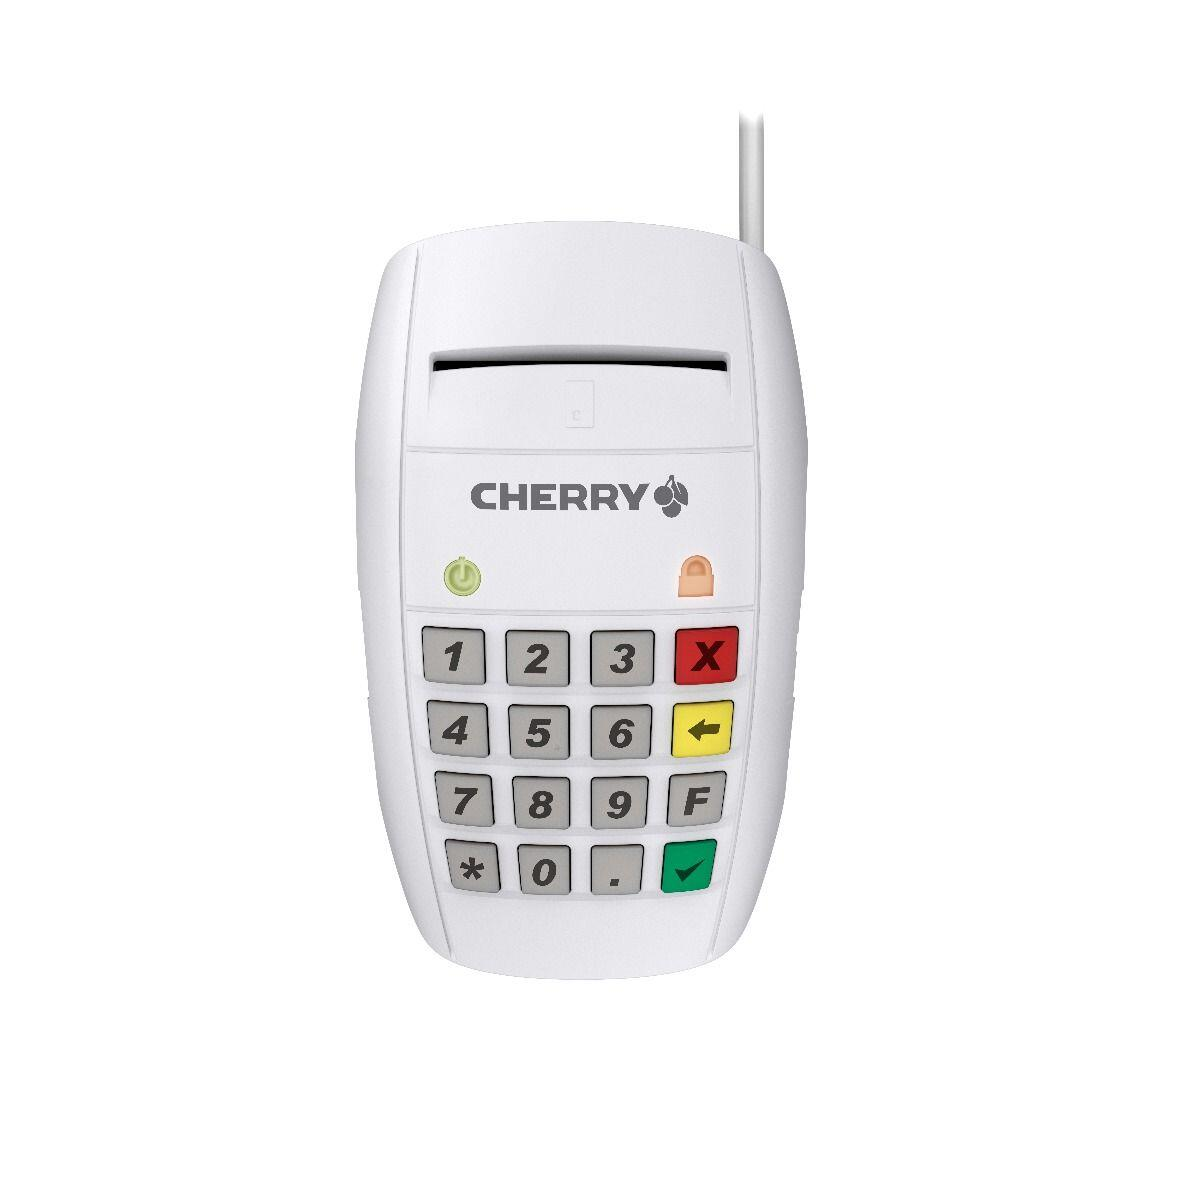 CHERRY Smart Terminal ST-2100 Kartenlesegerät, gainsboro weiß Standard